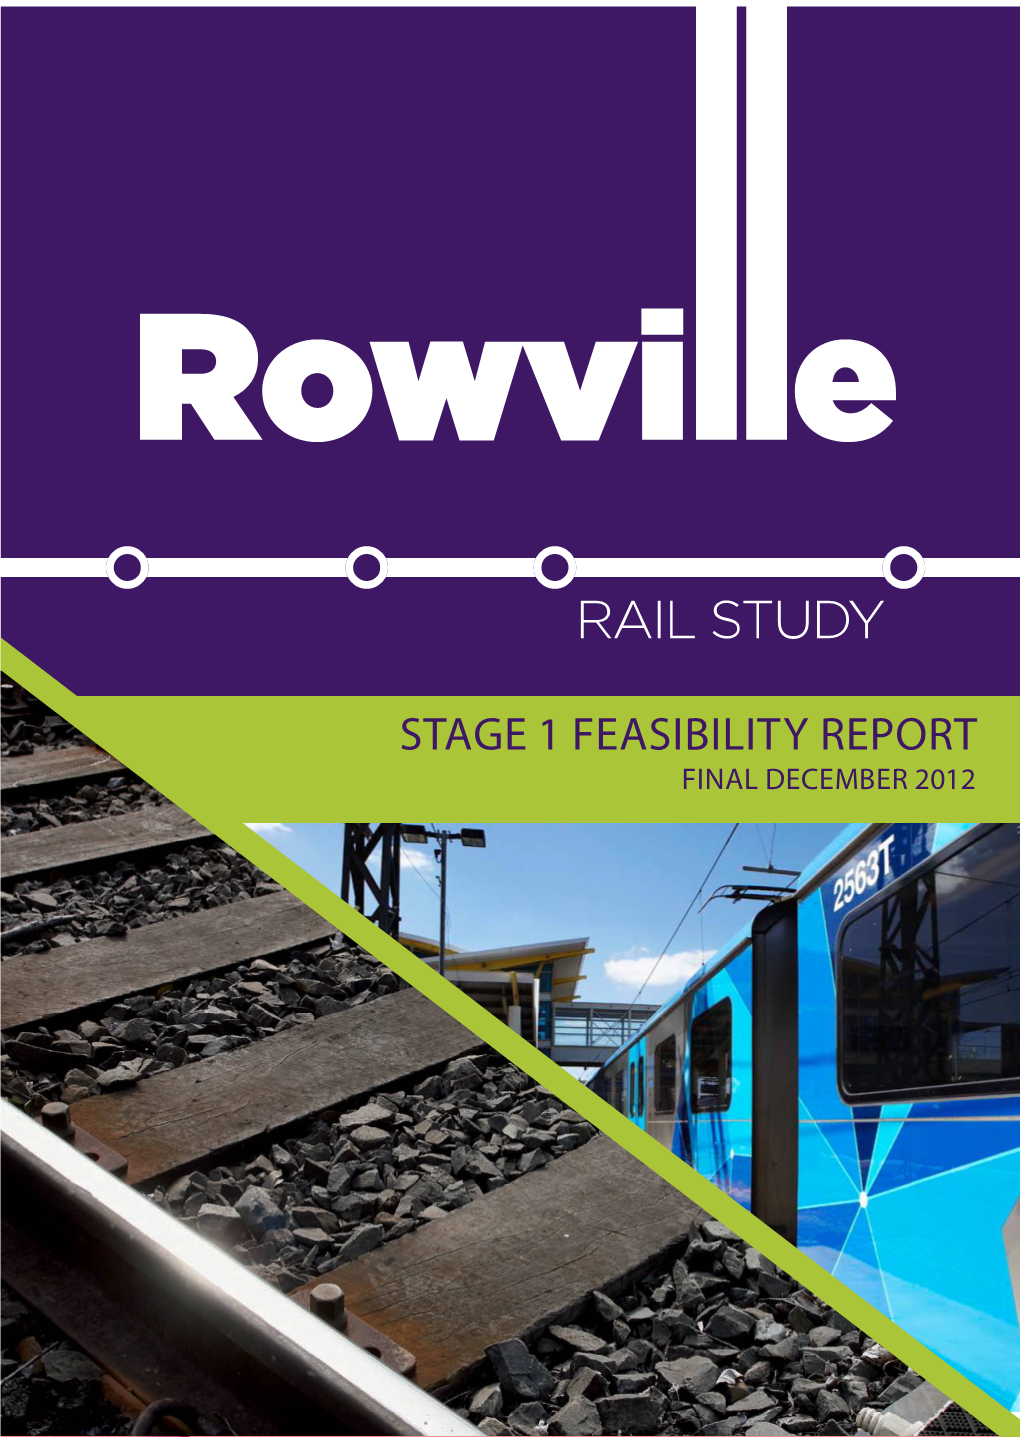 Rowville-Rail-Study-Final-Stage-1